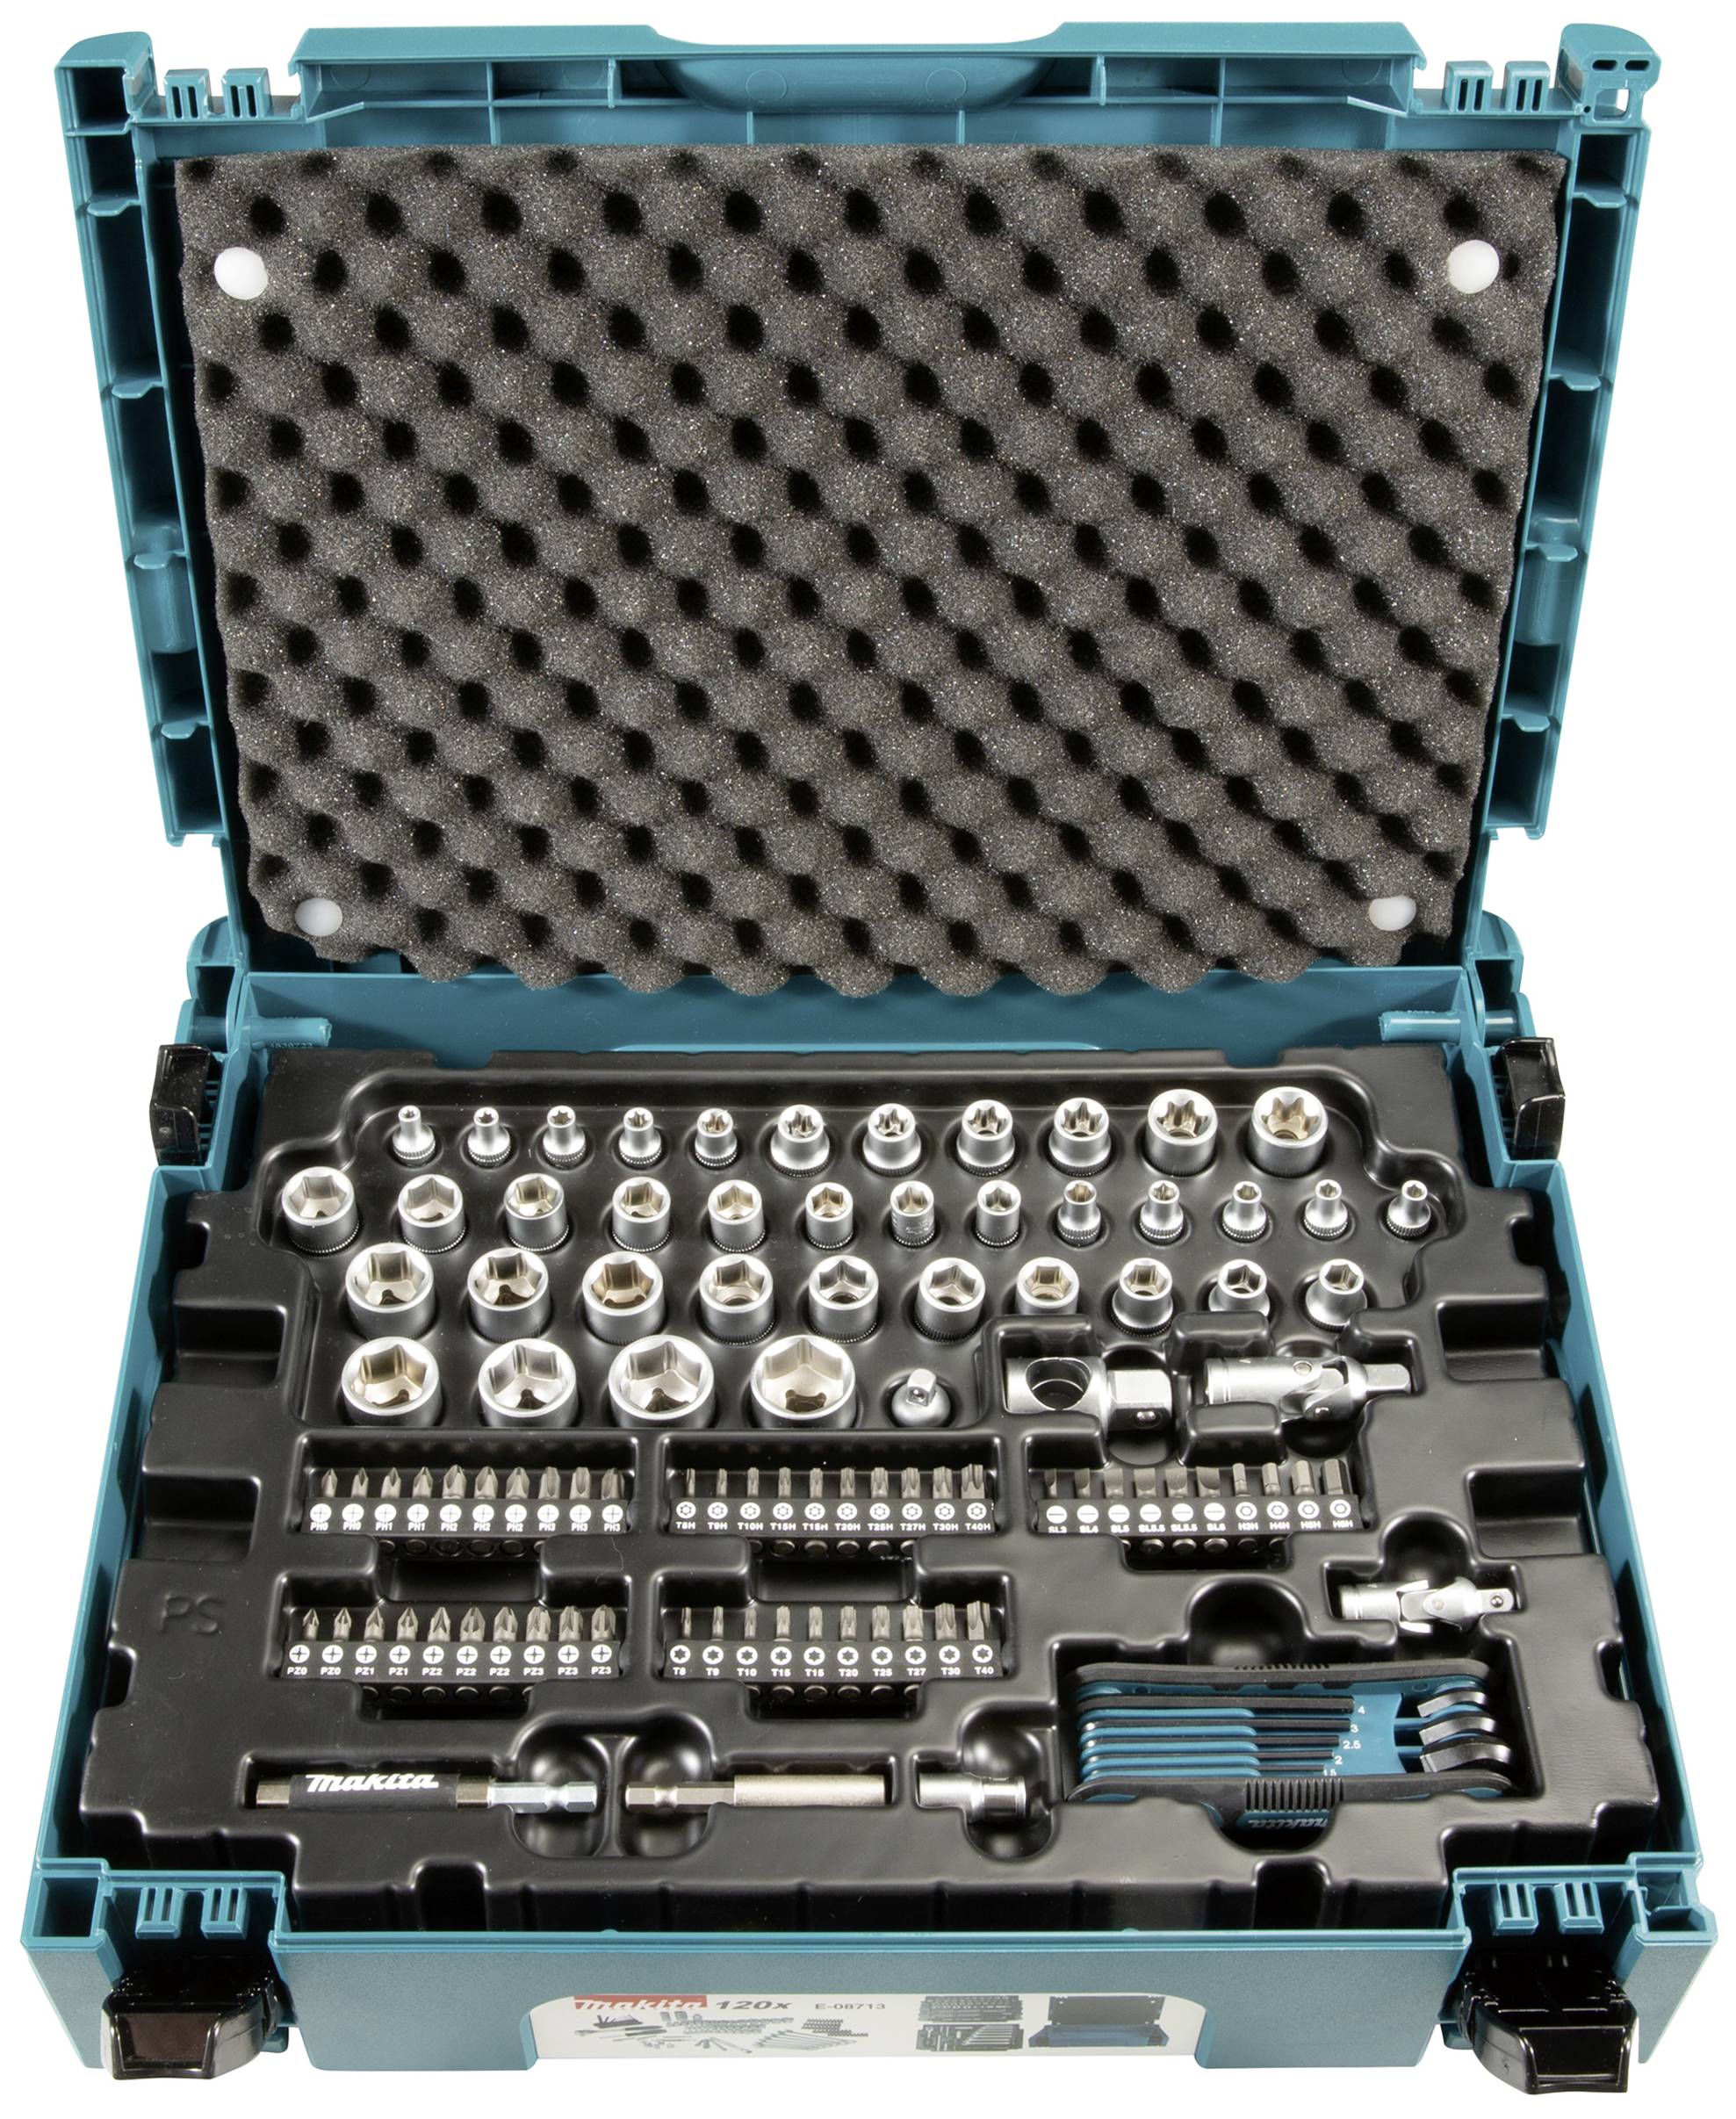 Vend tilbage respons kristen Makita E-08713 E-08713 Universal Tool kit Case 120-piece | Conrad.com